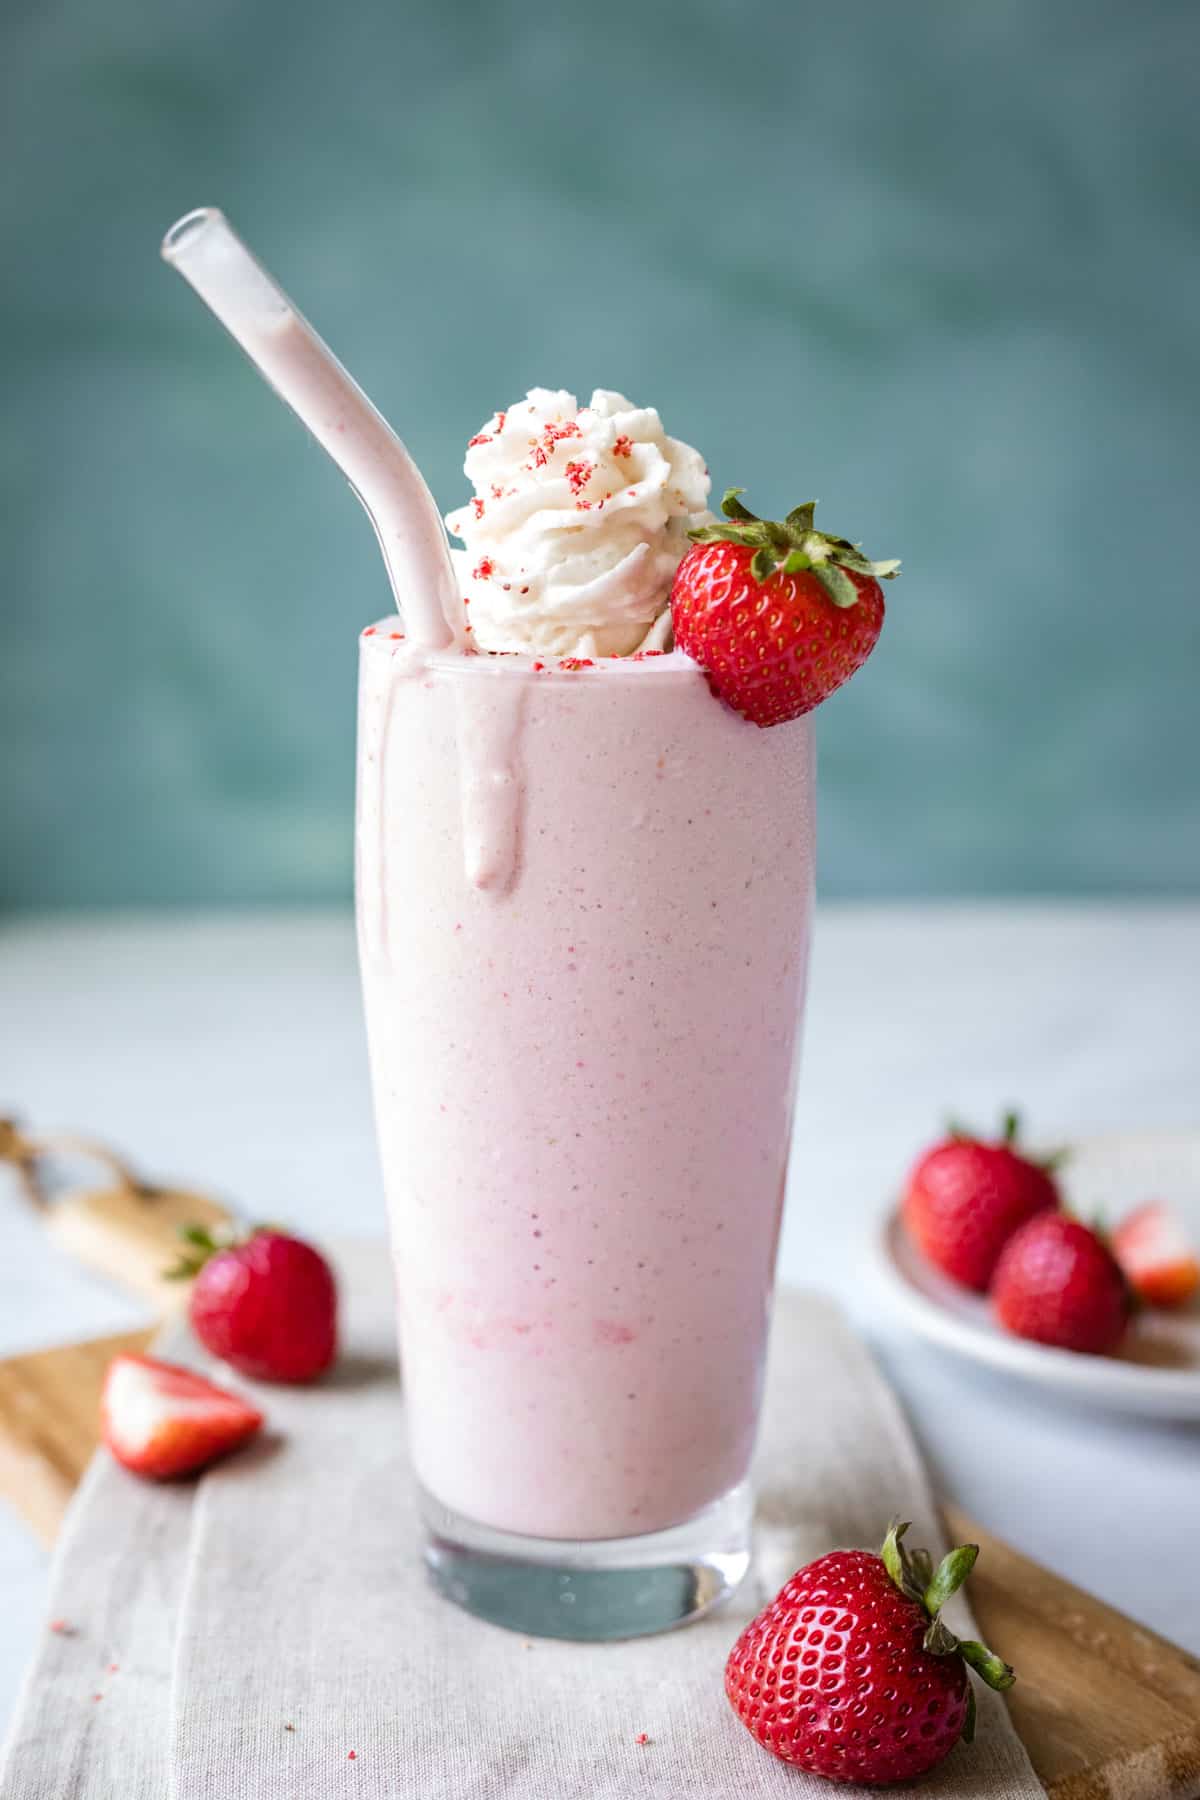 Vegan strawberry milkshake in a tall glass garnished with whipped cream and fresh strawberries.